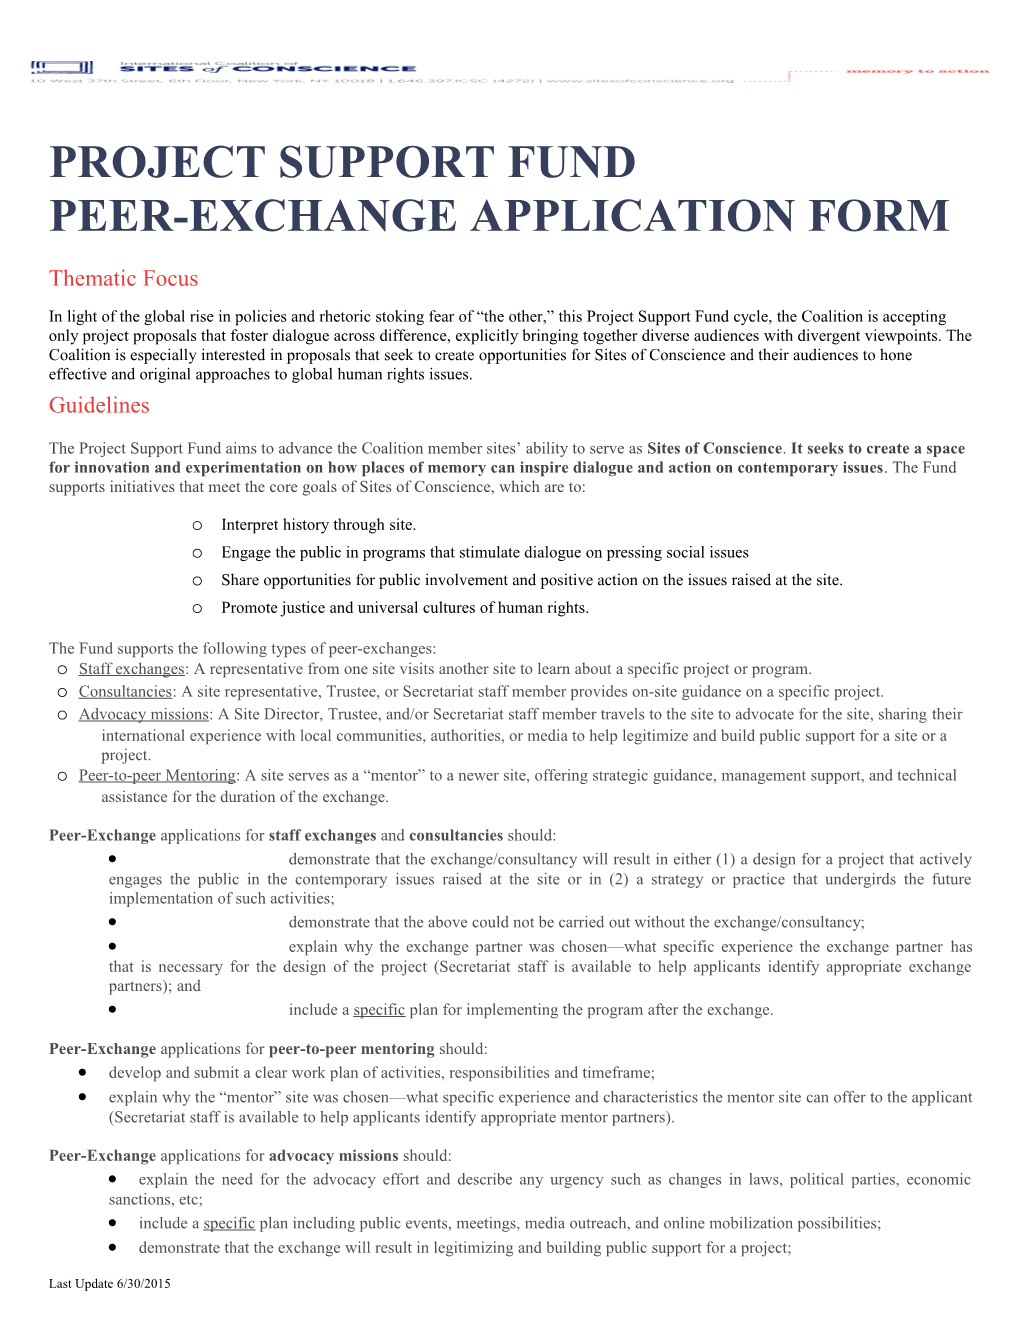 Peer-Exchange Application Form